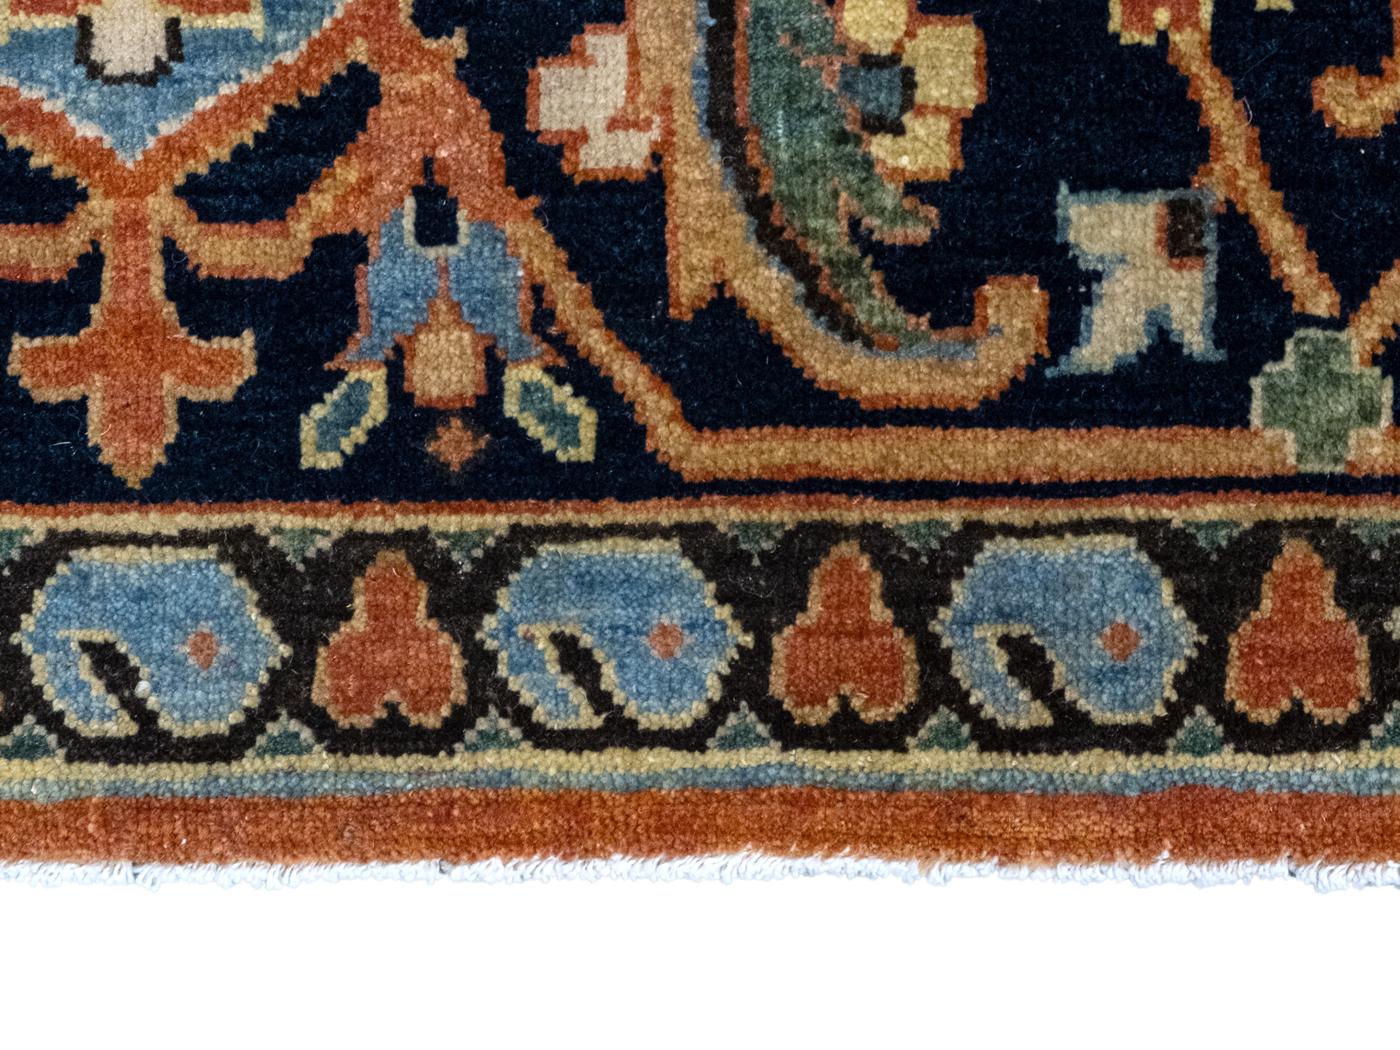 Contemporary Classic Persian Serapi Carpet in Orange, Indigo, and Blue